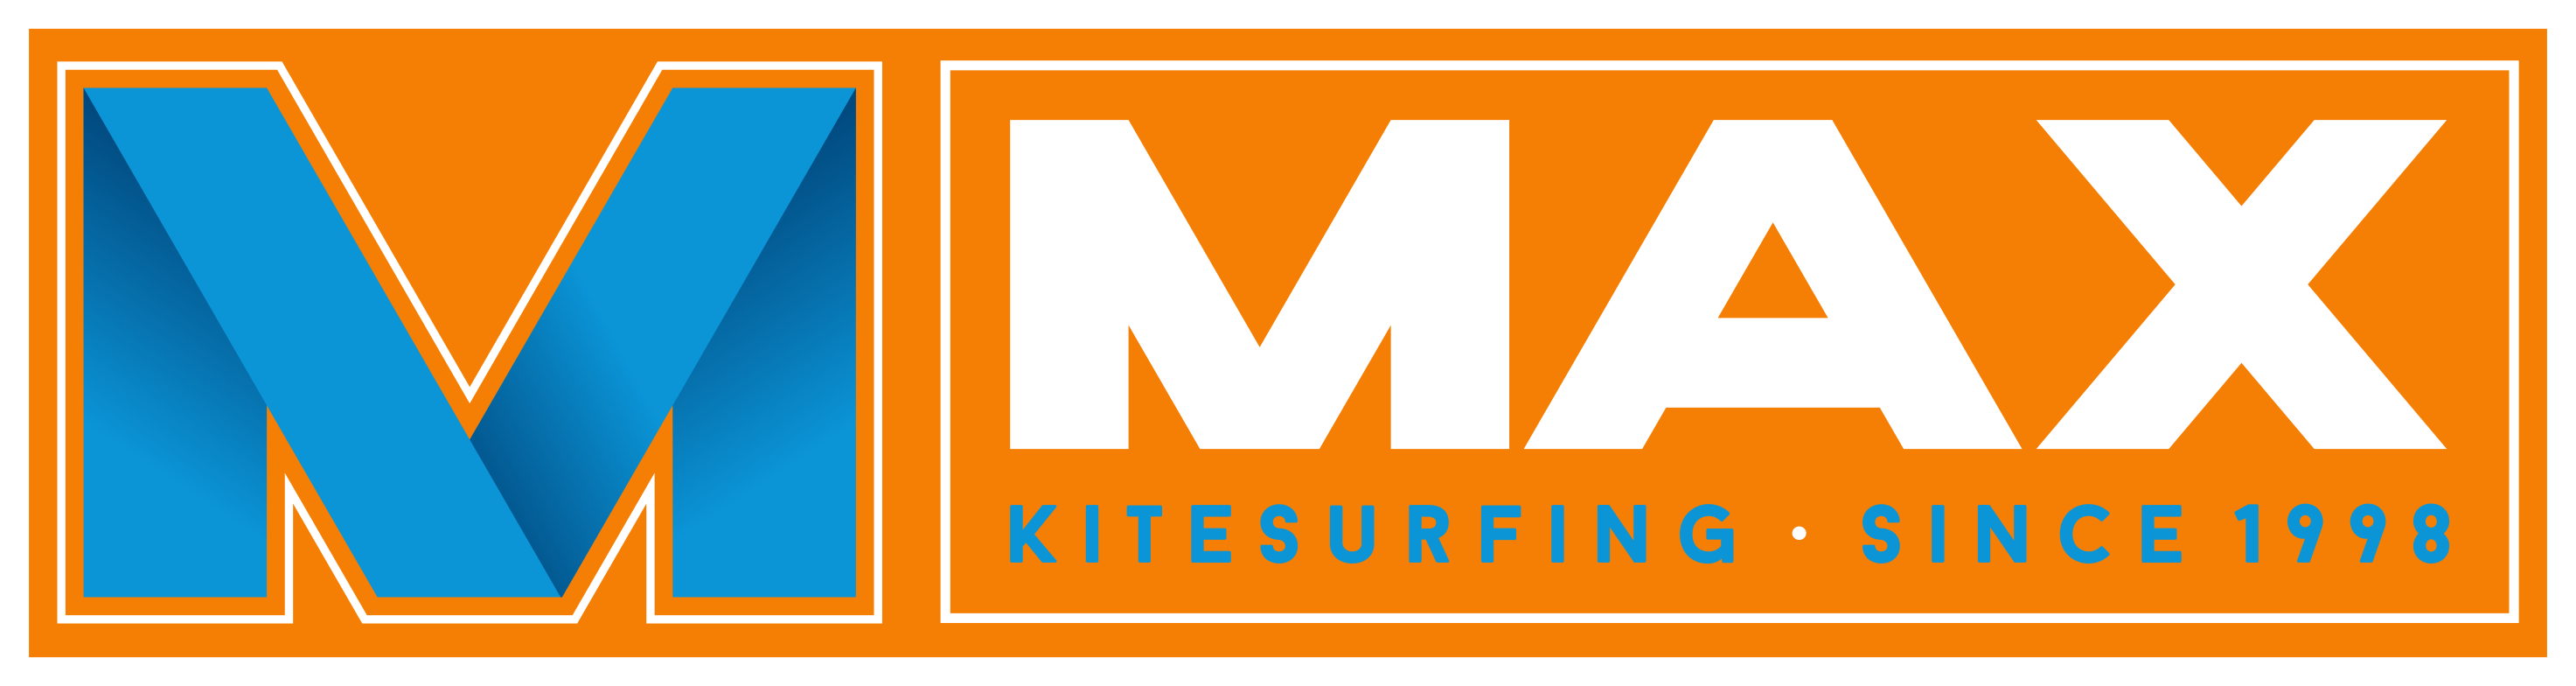 Tarifa Max Kitesurfing - Curso de kitesurf en Tarifa